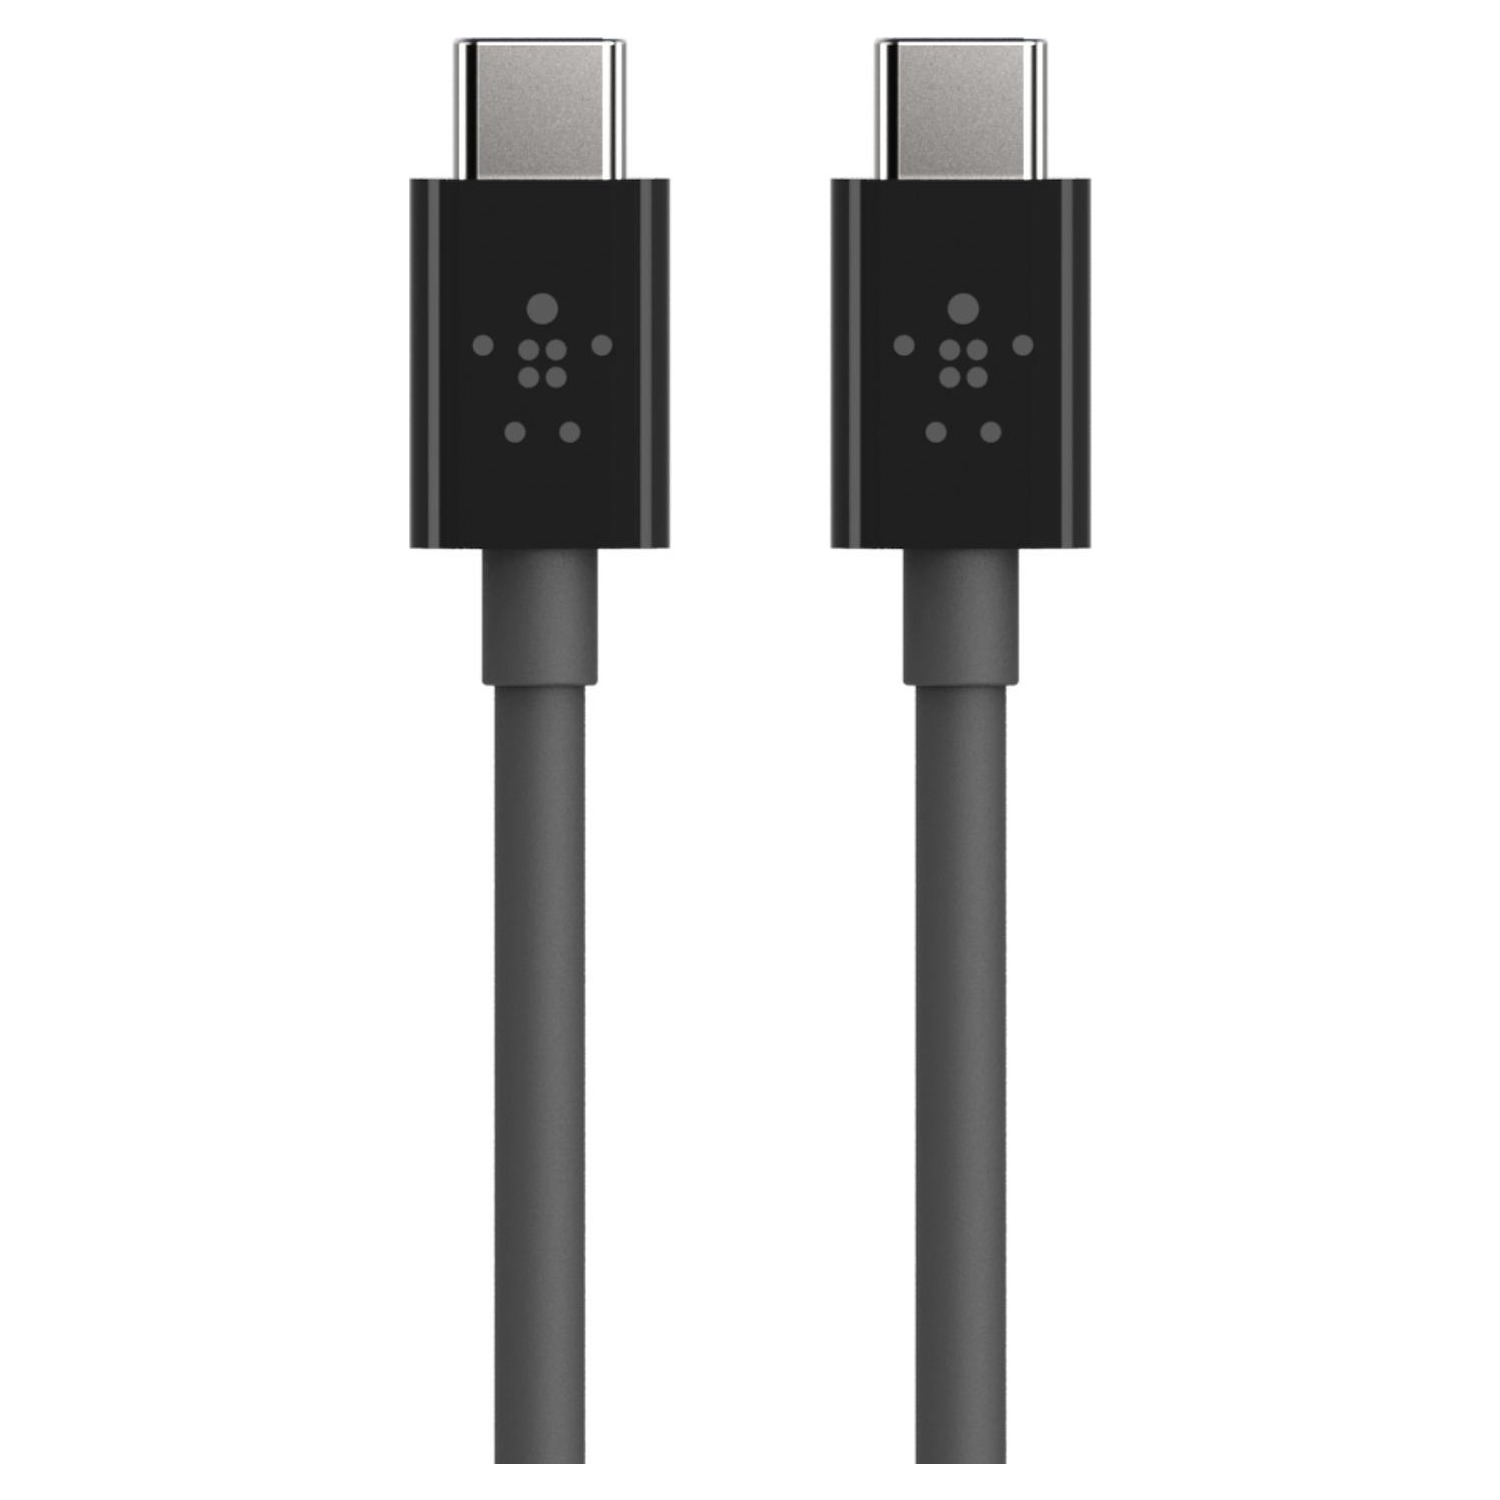 Immagine per Belkin cavo ricarica da USB-C a USB-C 5A nero     1metro da DIMOStore